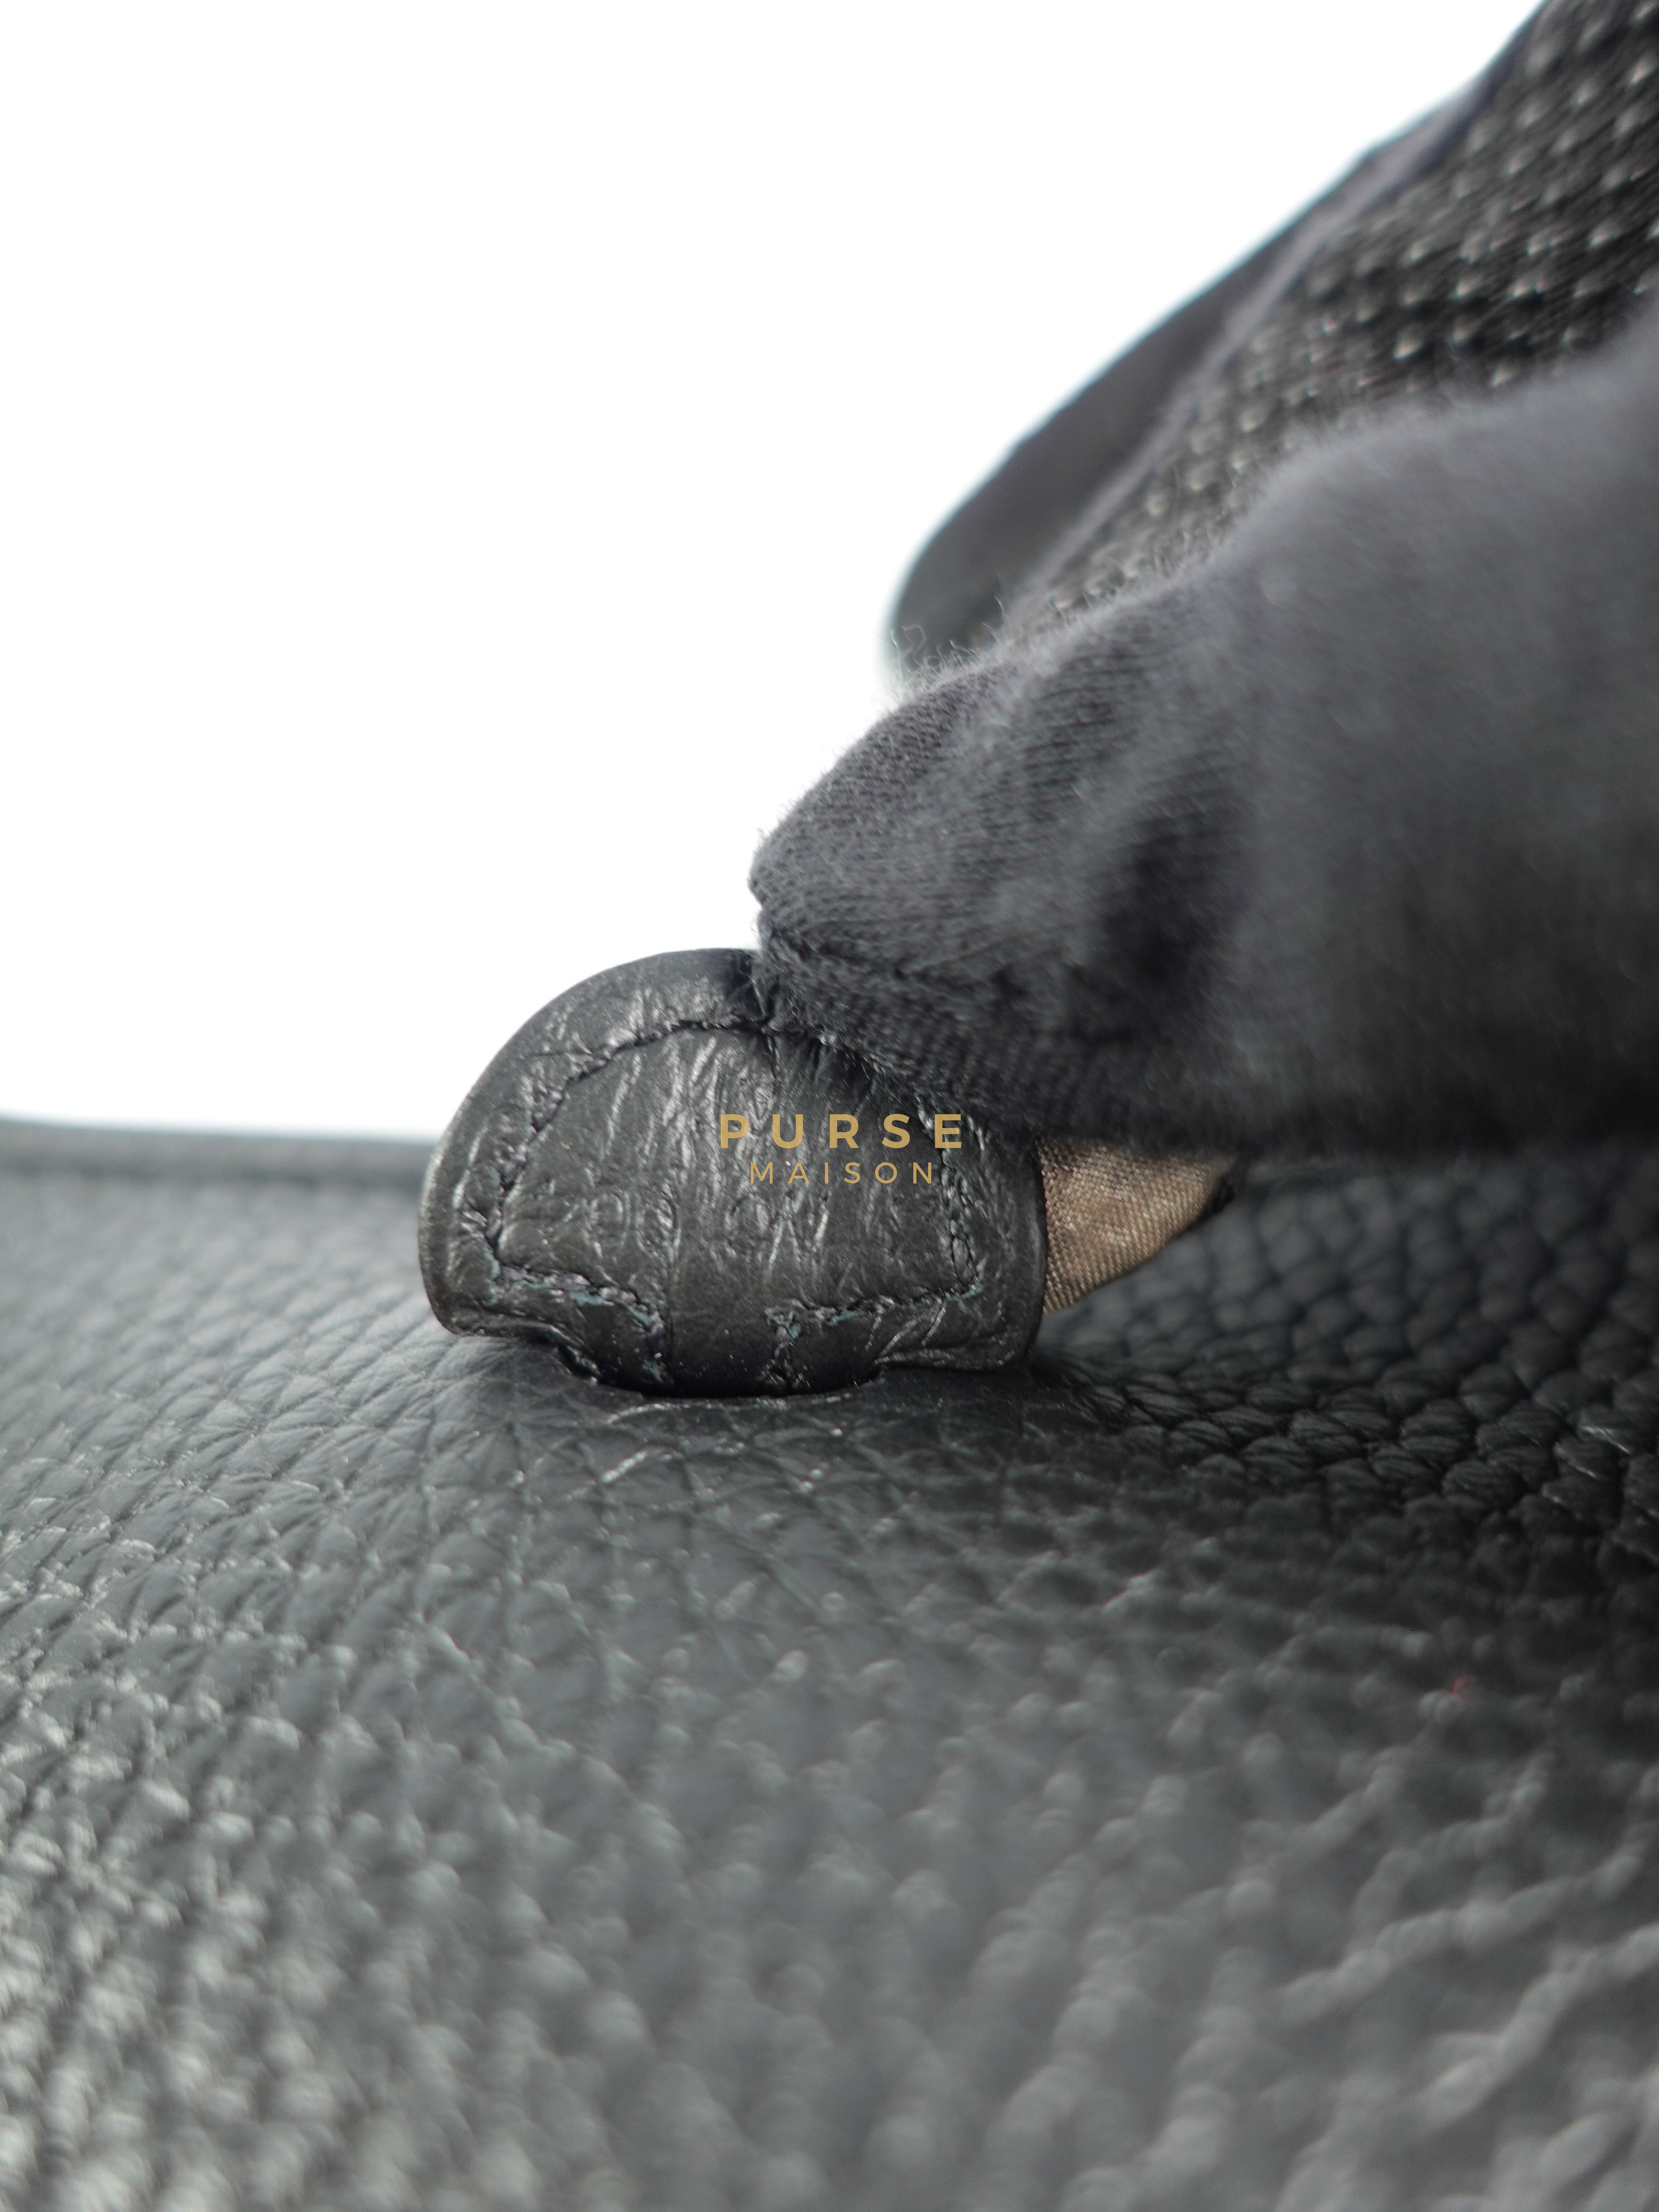 Evelyne 16 TPM Noir (Black) Taurillon Clemence Leather and Palladium Hardware Stamp Z (2021) | Purse Maison Luxury Bags Shop